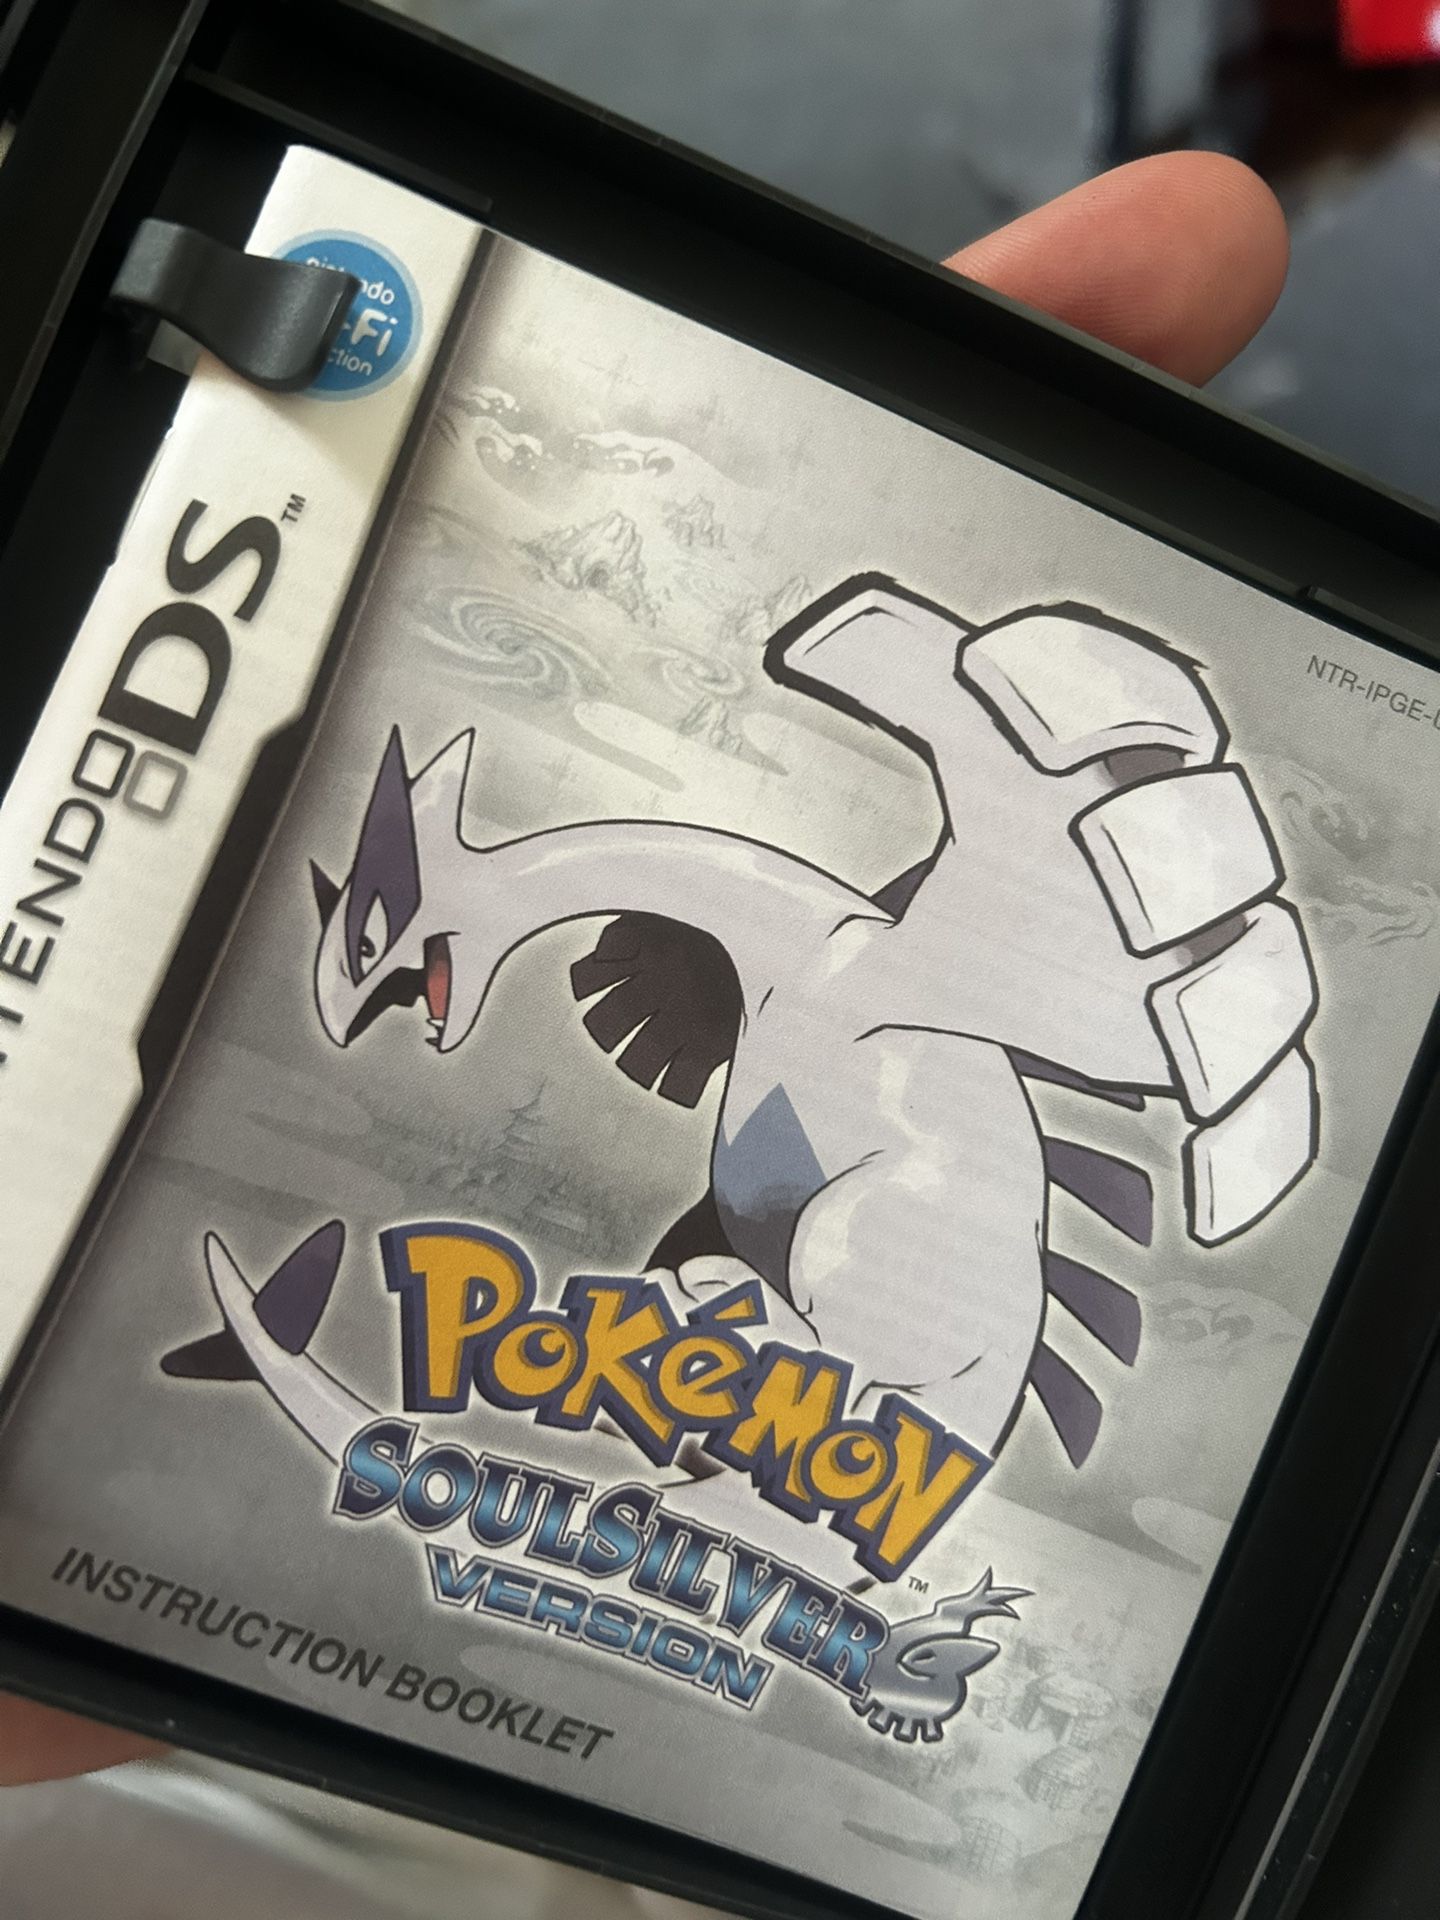 Pokémon Soul Silver Not For Resale